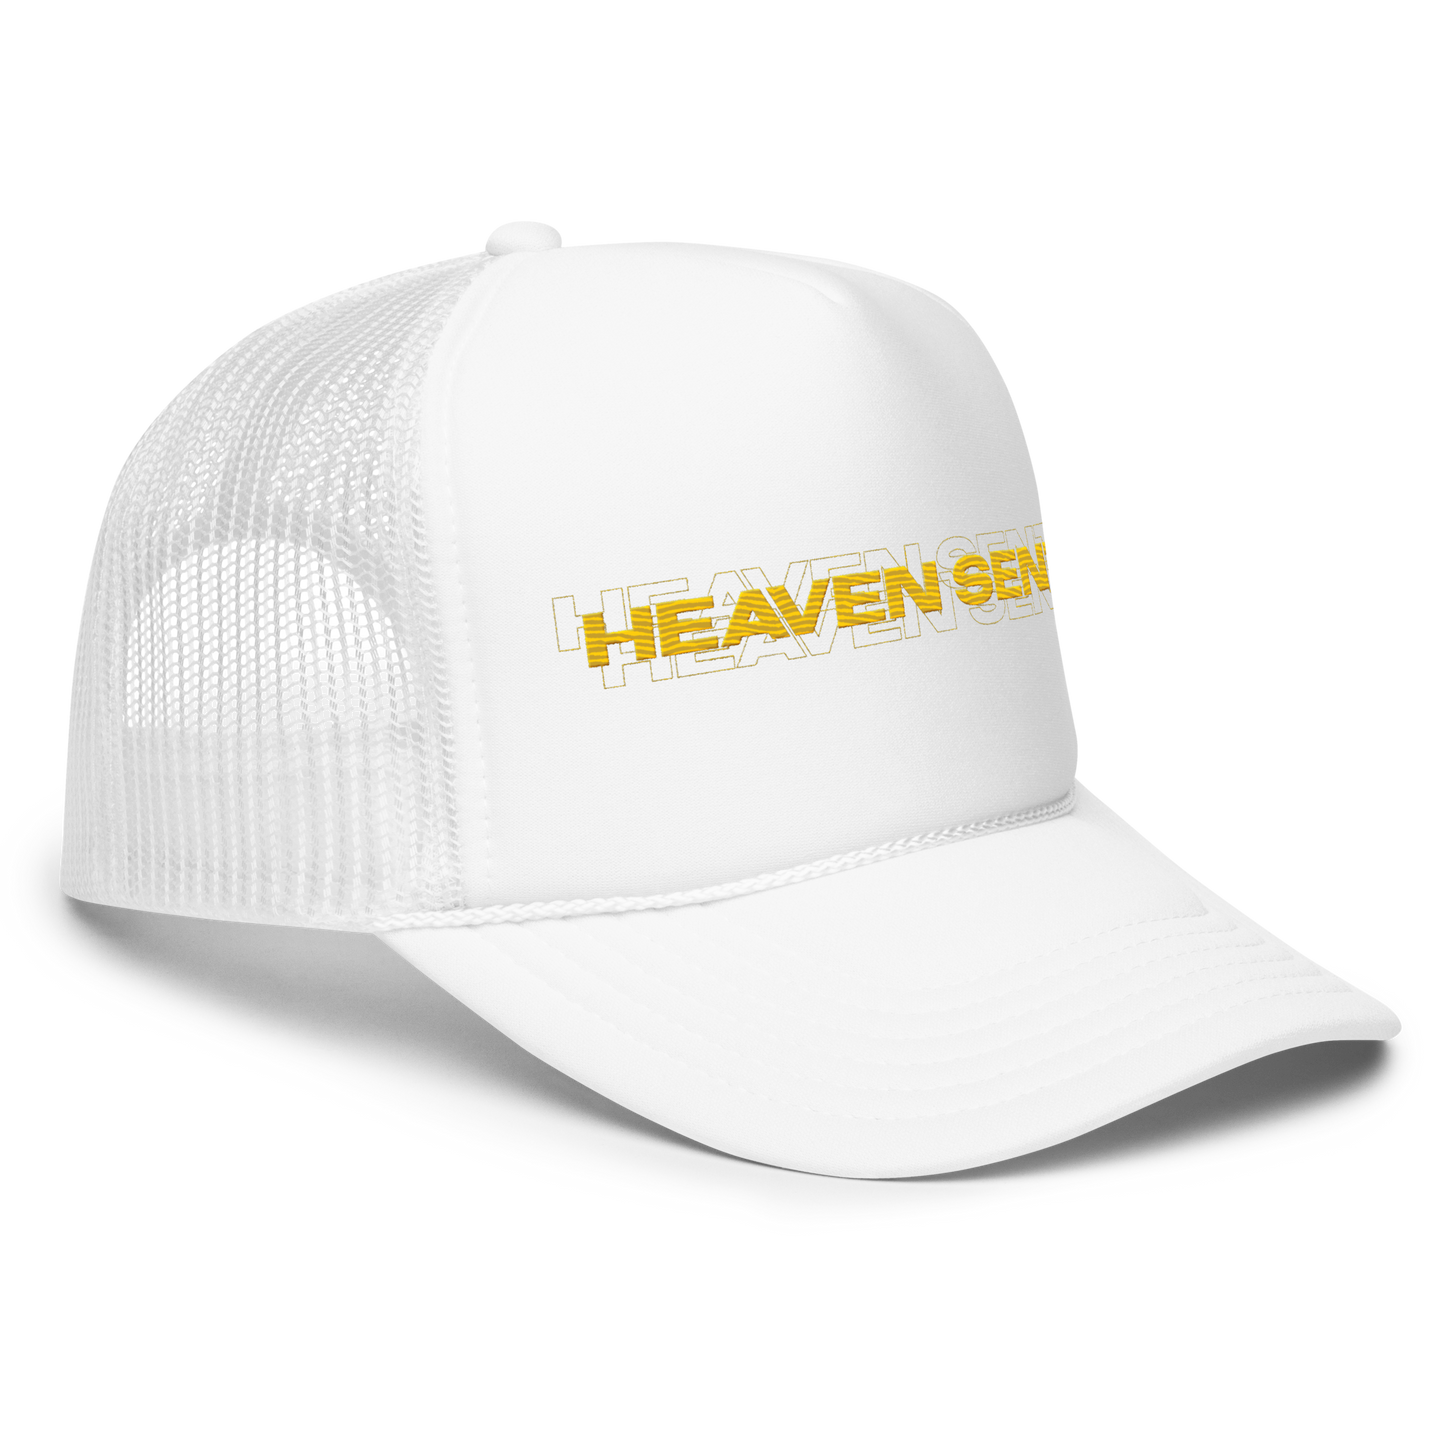 Heaven sent multi-color trucker hats